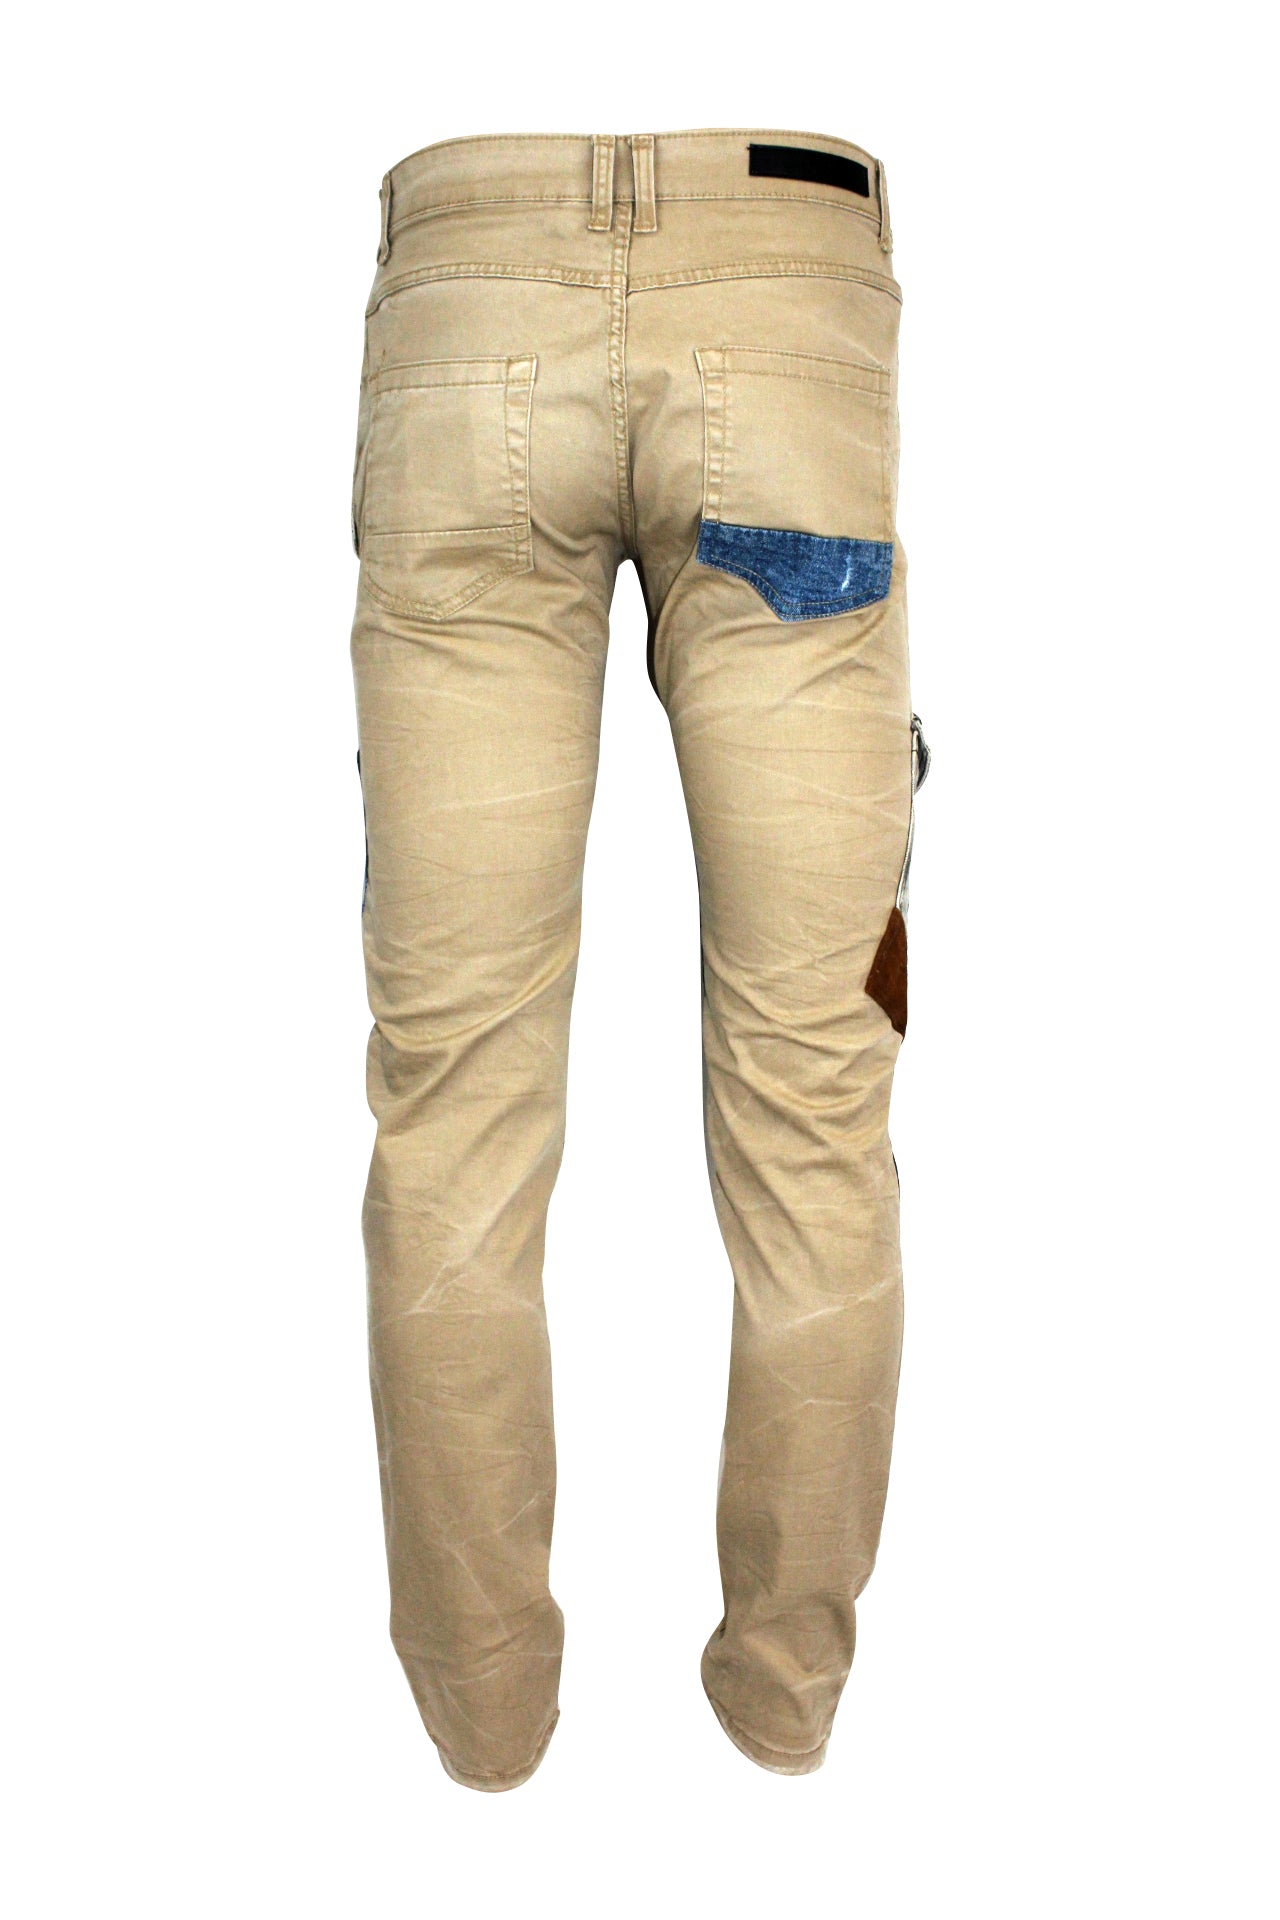 Elastic Waist Khaki Twill Trousers (Full Elastic Waistband) - Men - Pants -  CALPIA Store